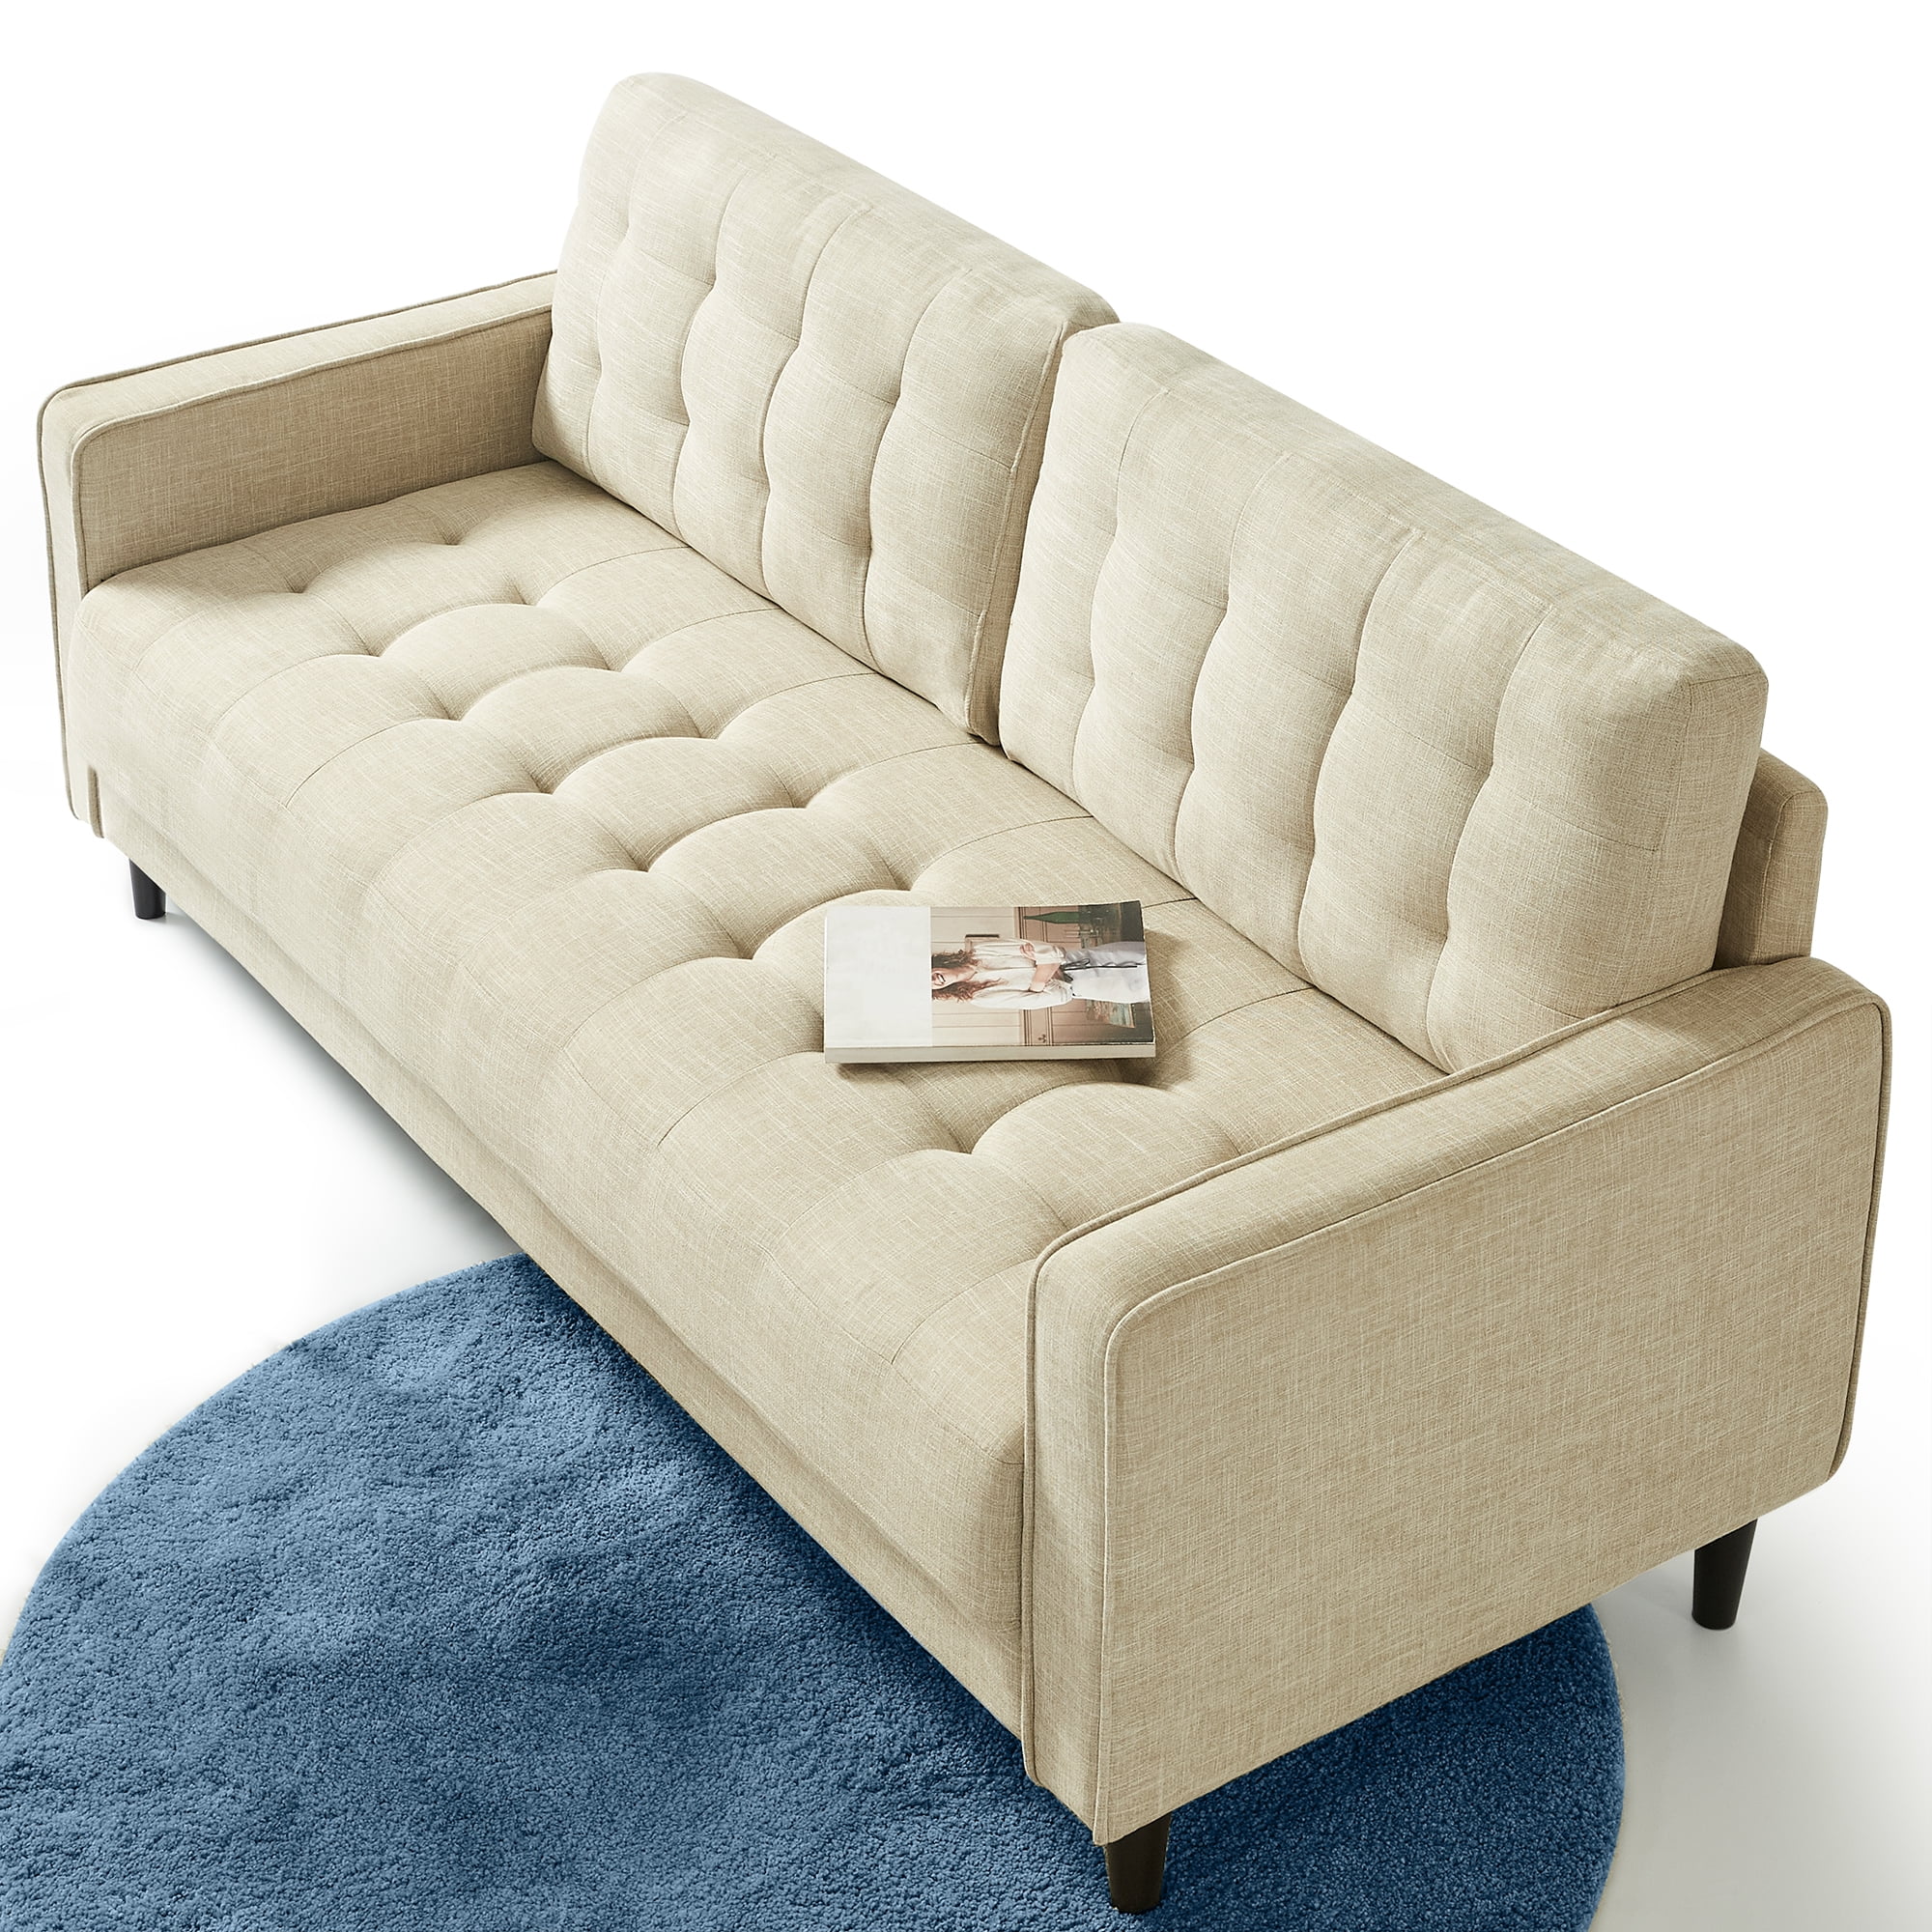 Zinus Benton Upholstered Sofa Couch